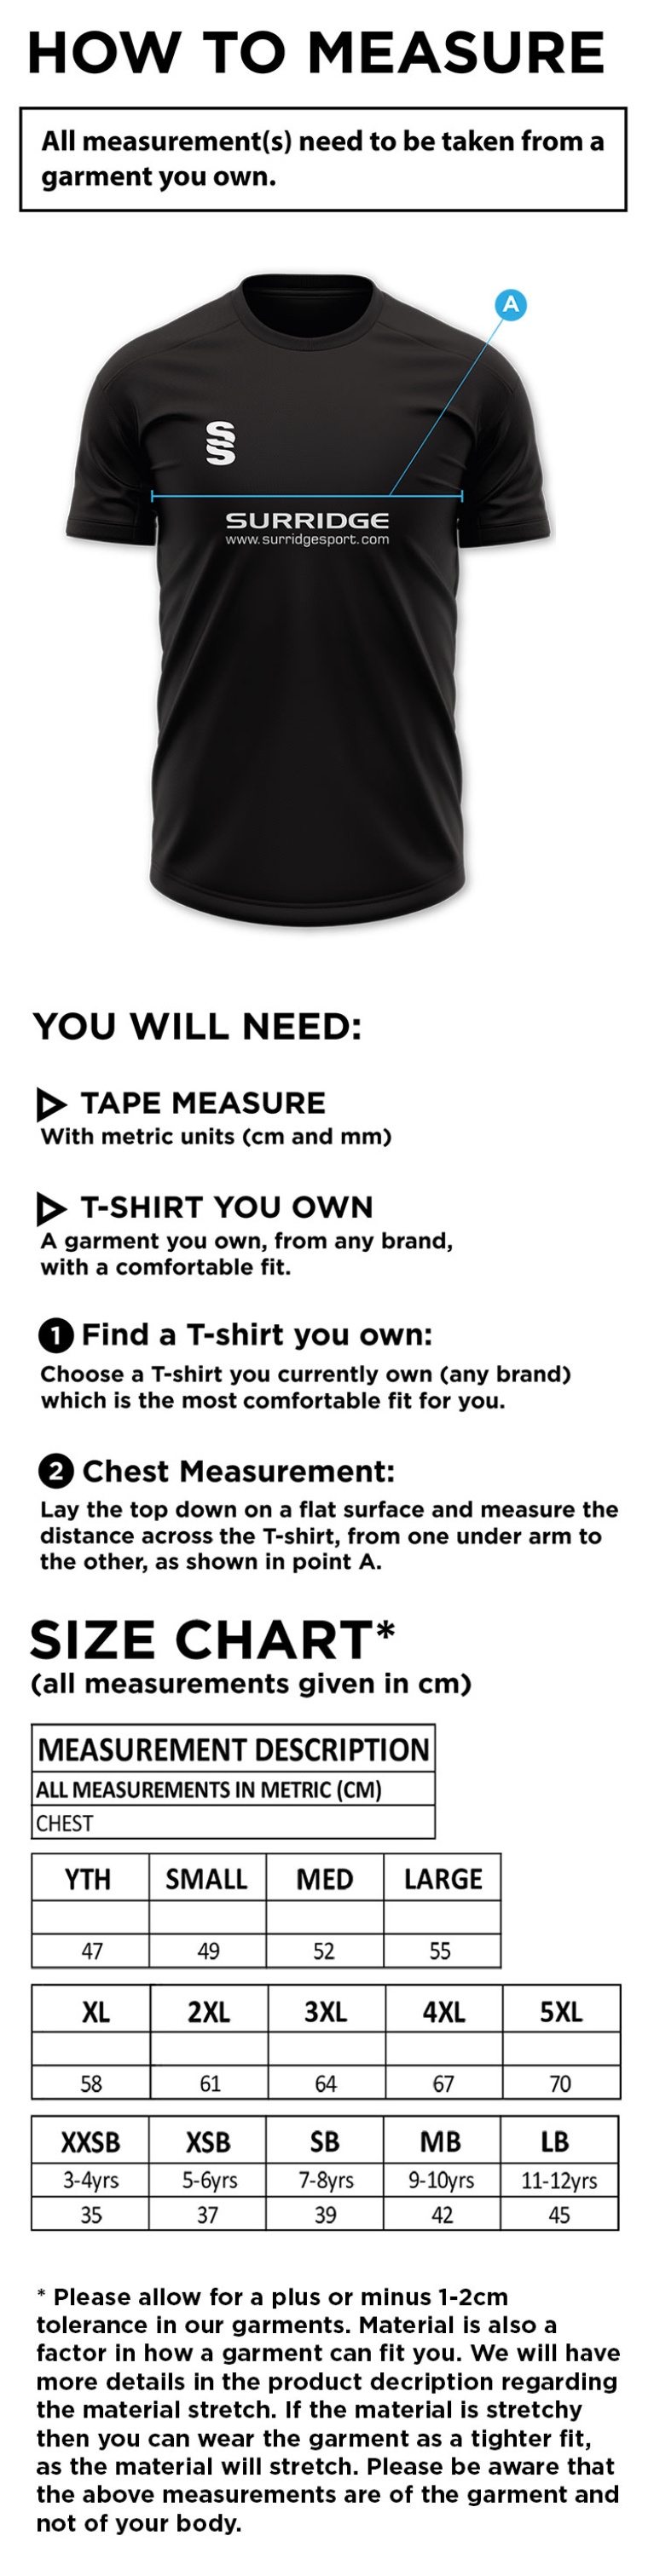 Sandy CC - Blade T-shirt - Size Guide